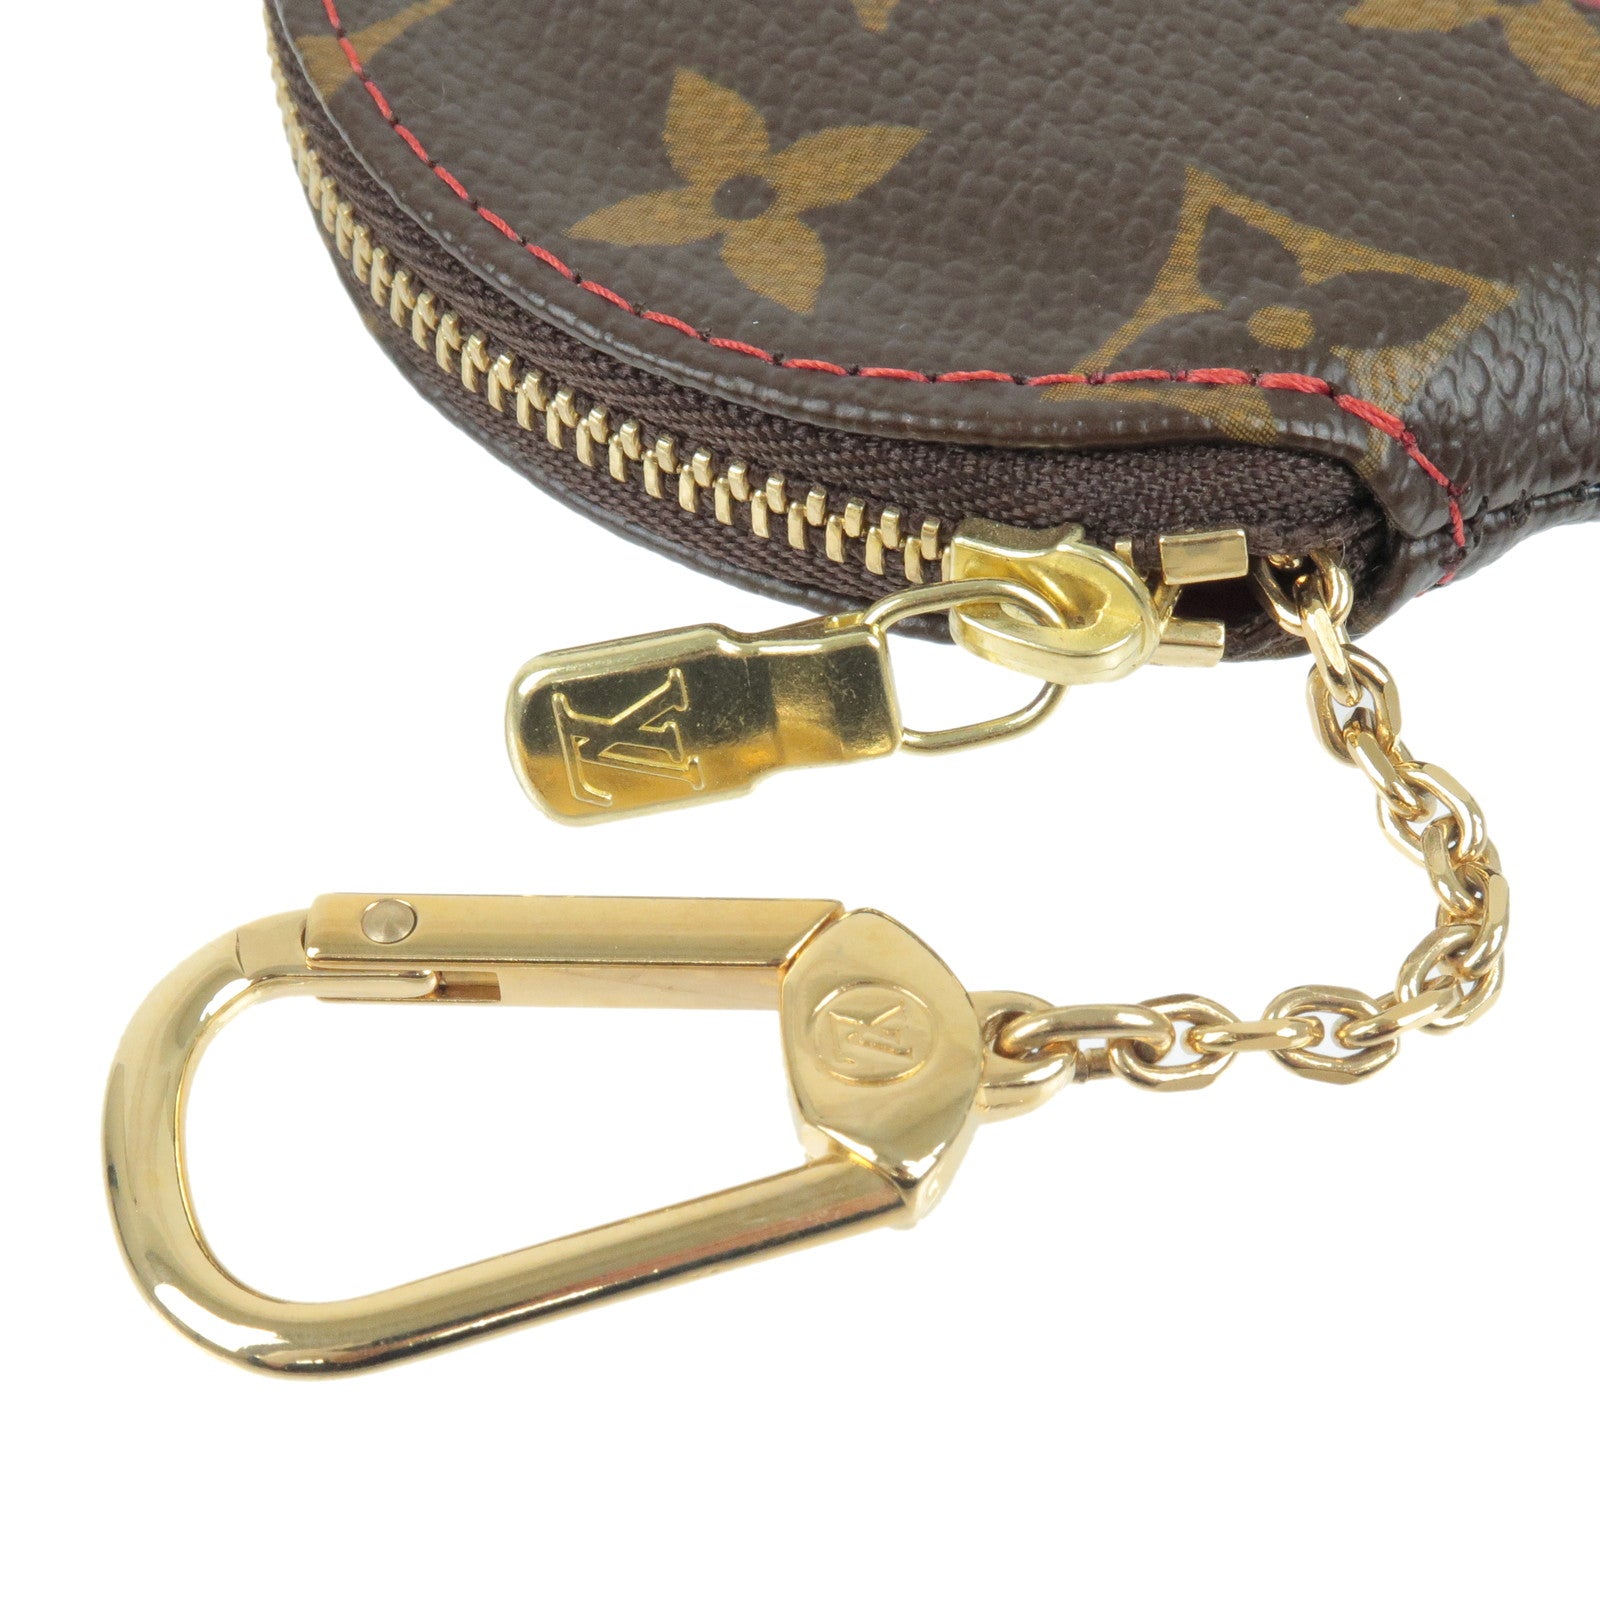 Louis Vuitton LockMe Tender Pochette Bag - Gold House